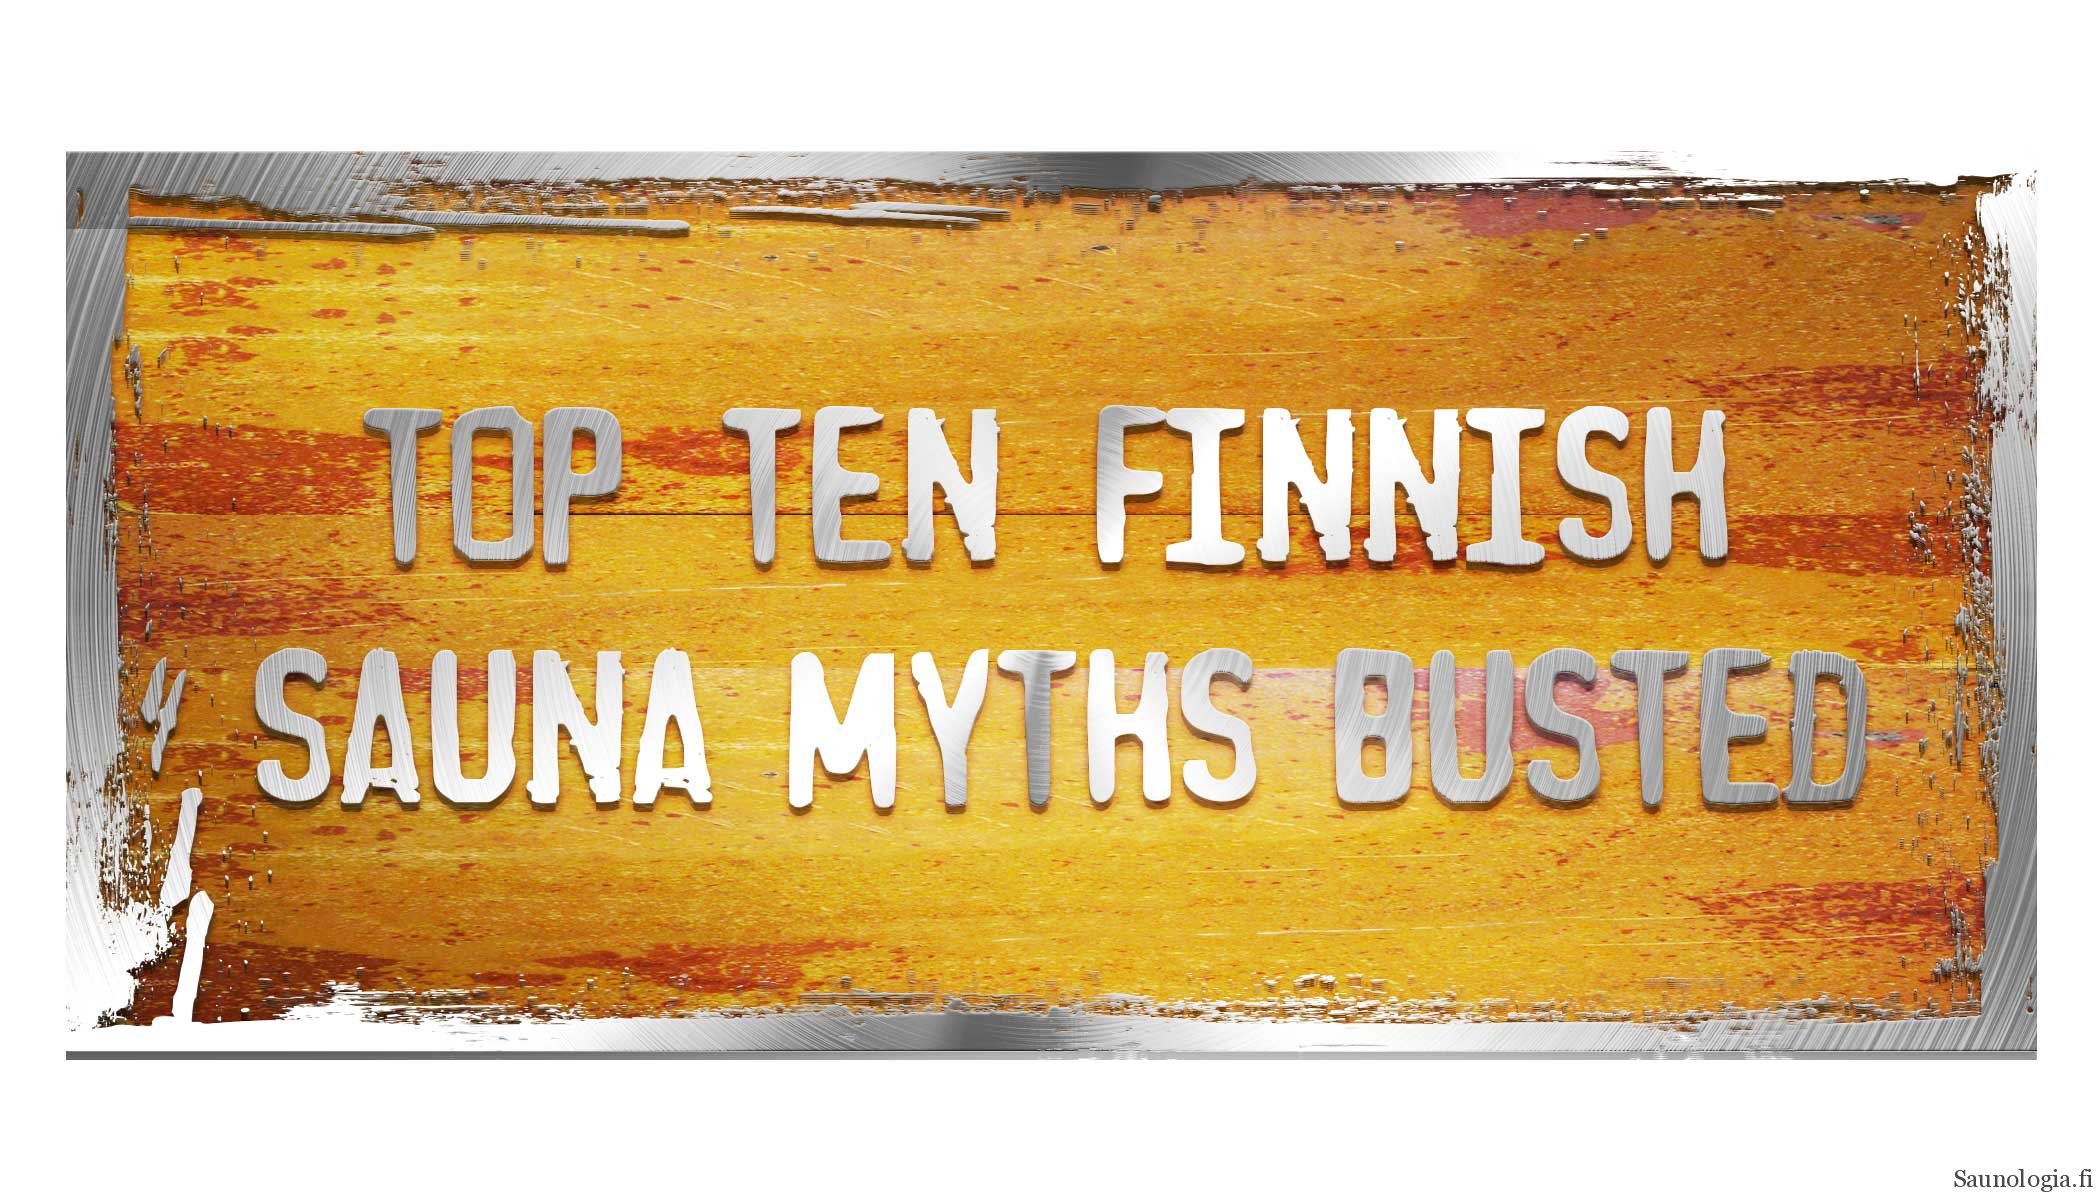 Top Ten Finnish Sauna Myths Busted